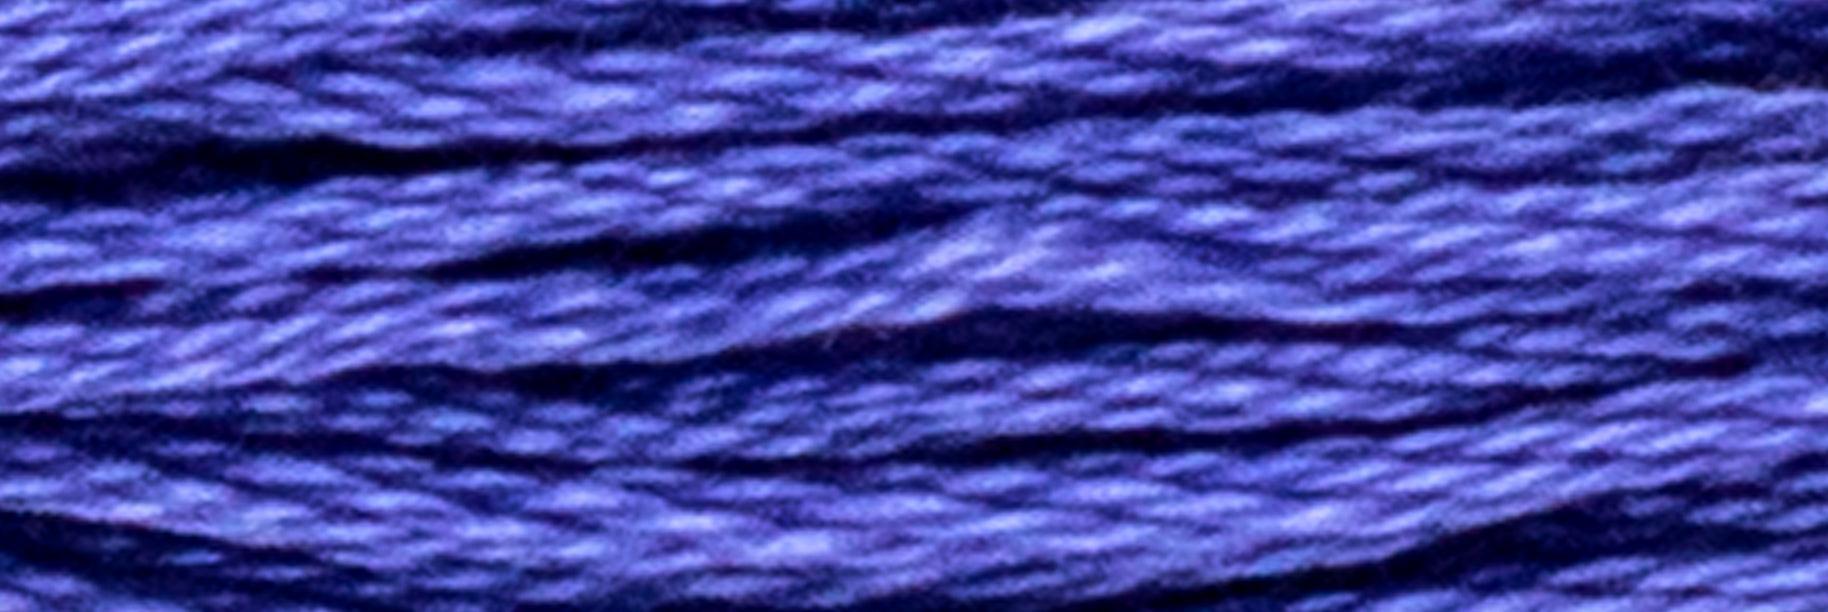 Stranded Cotton Luca-S - 141 / DMC 792 / Anchor 177 - Luca-S Stranded Cotton